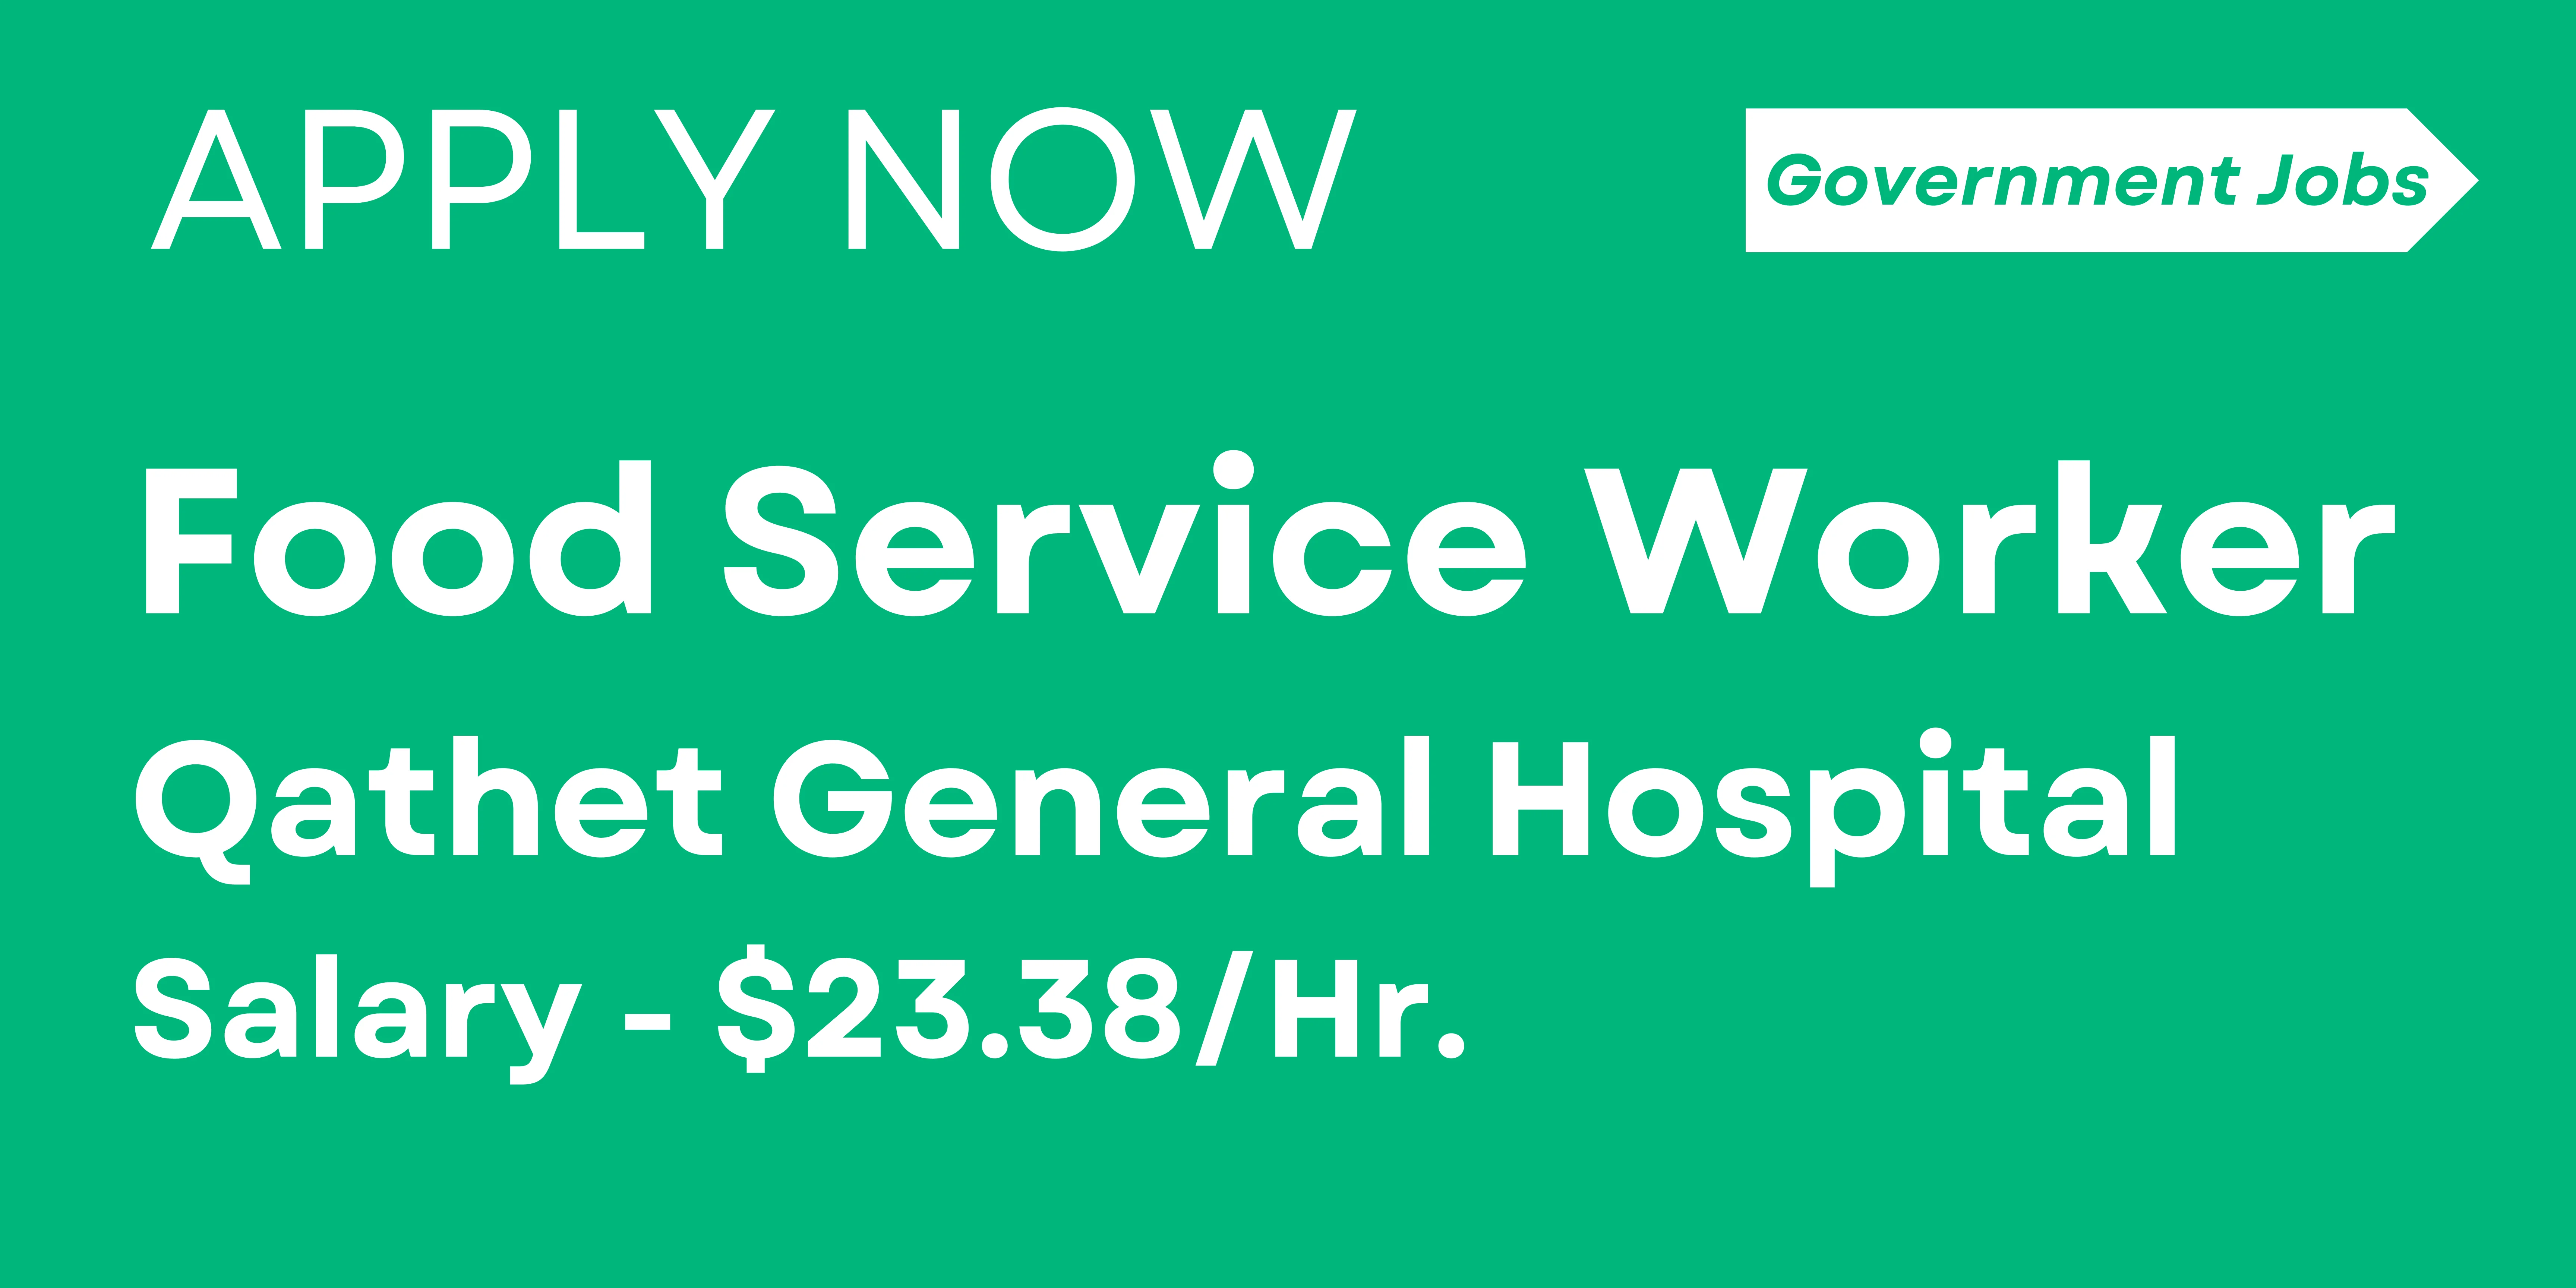 Food Service Worker I Qathet General Hospital I entry level government jobs